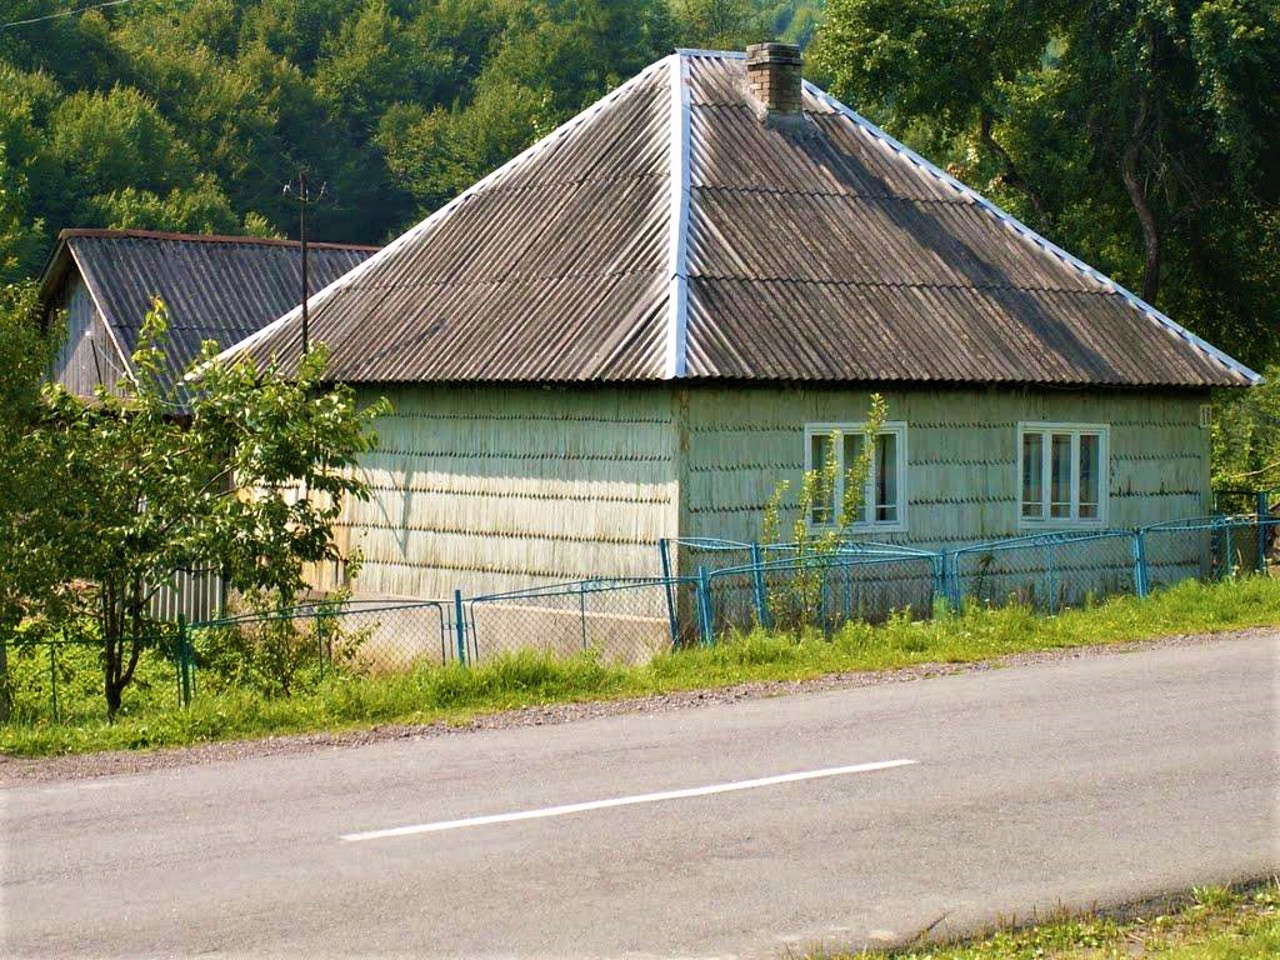 Verkhnia Hrabivnytsia village